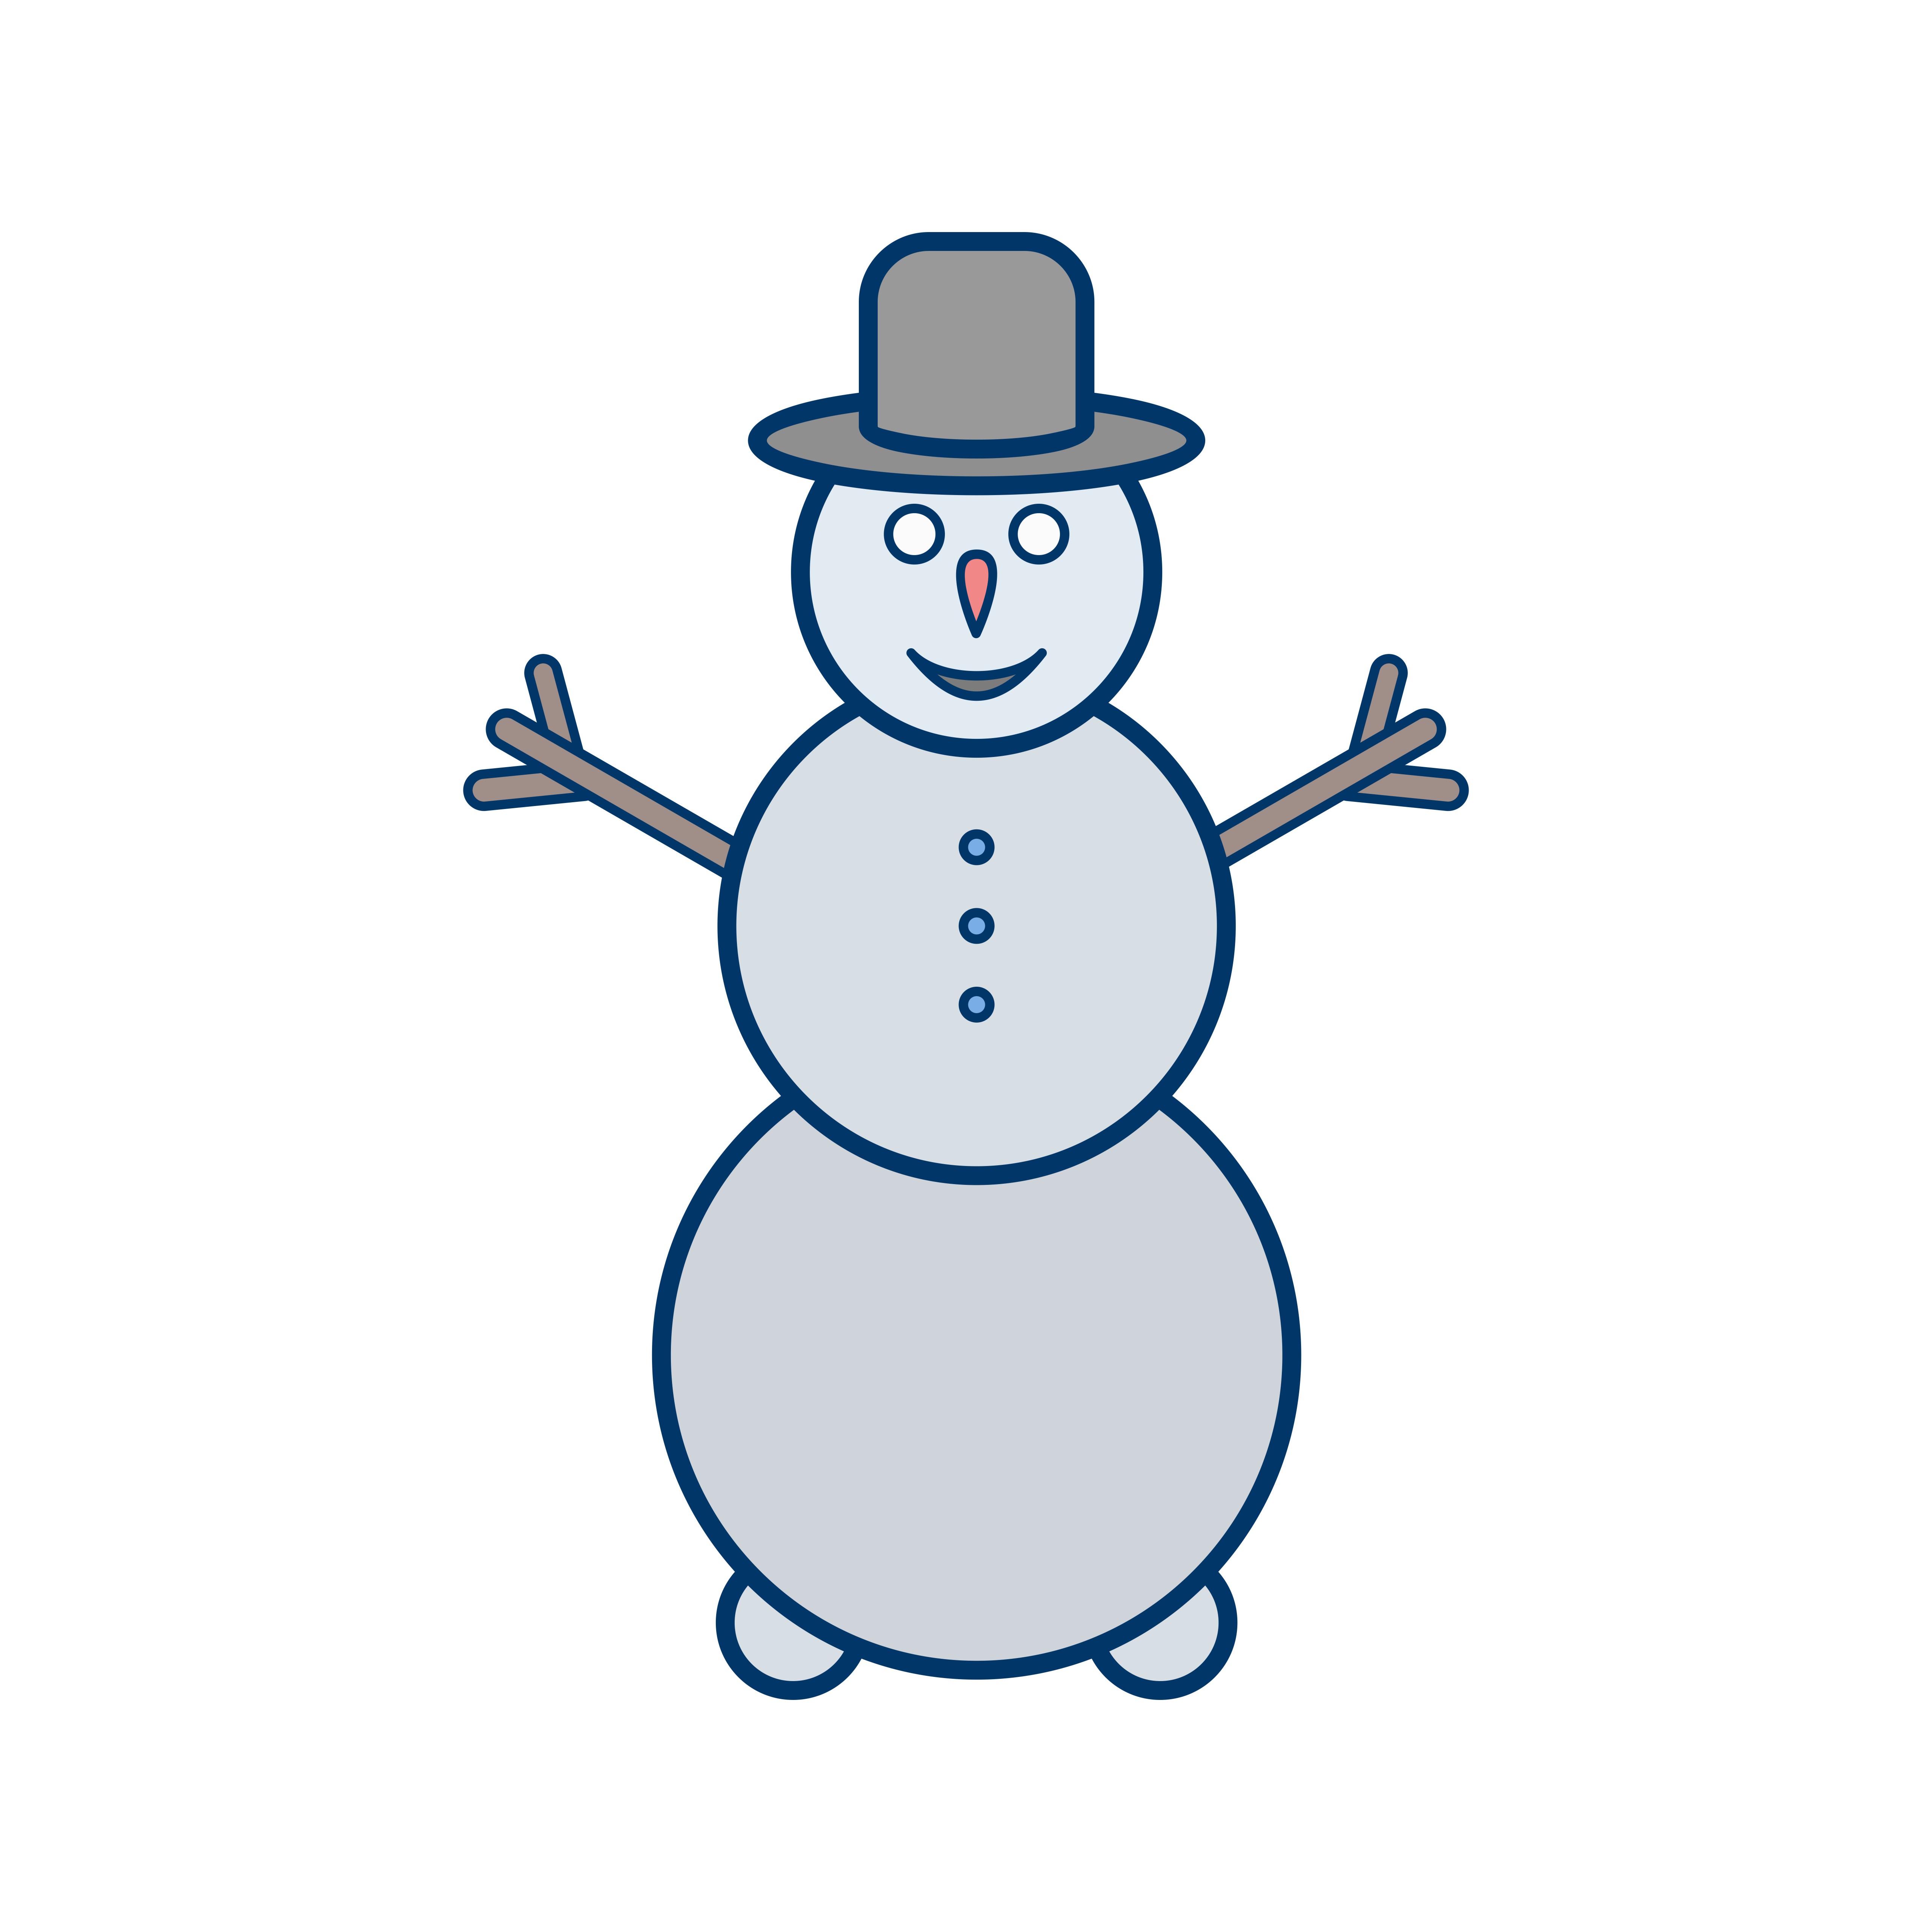 Download Snowman Vector Icon 441700 - Download Free Vectors, Clipart Graphics & Vector Art